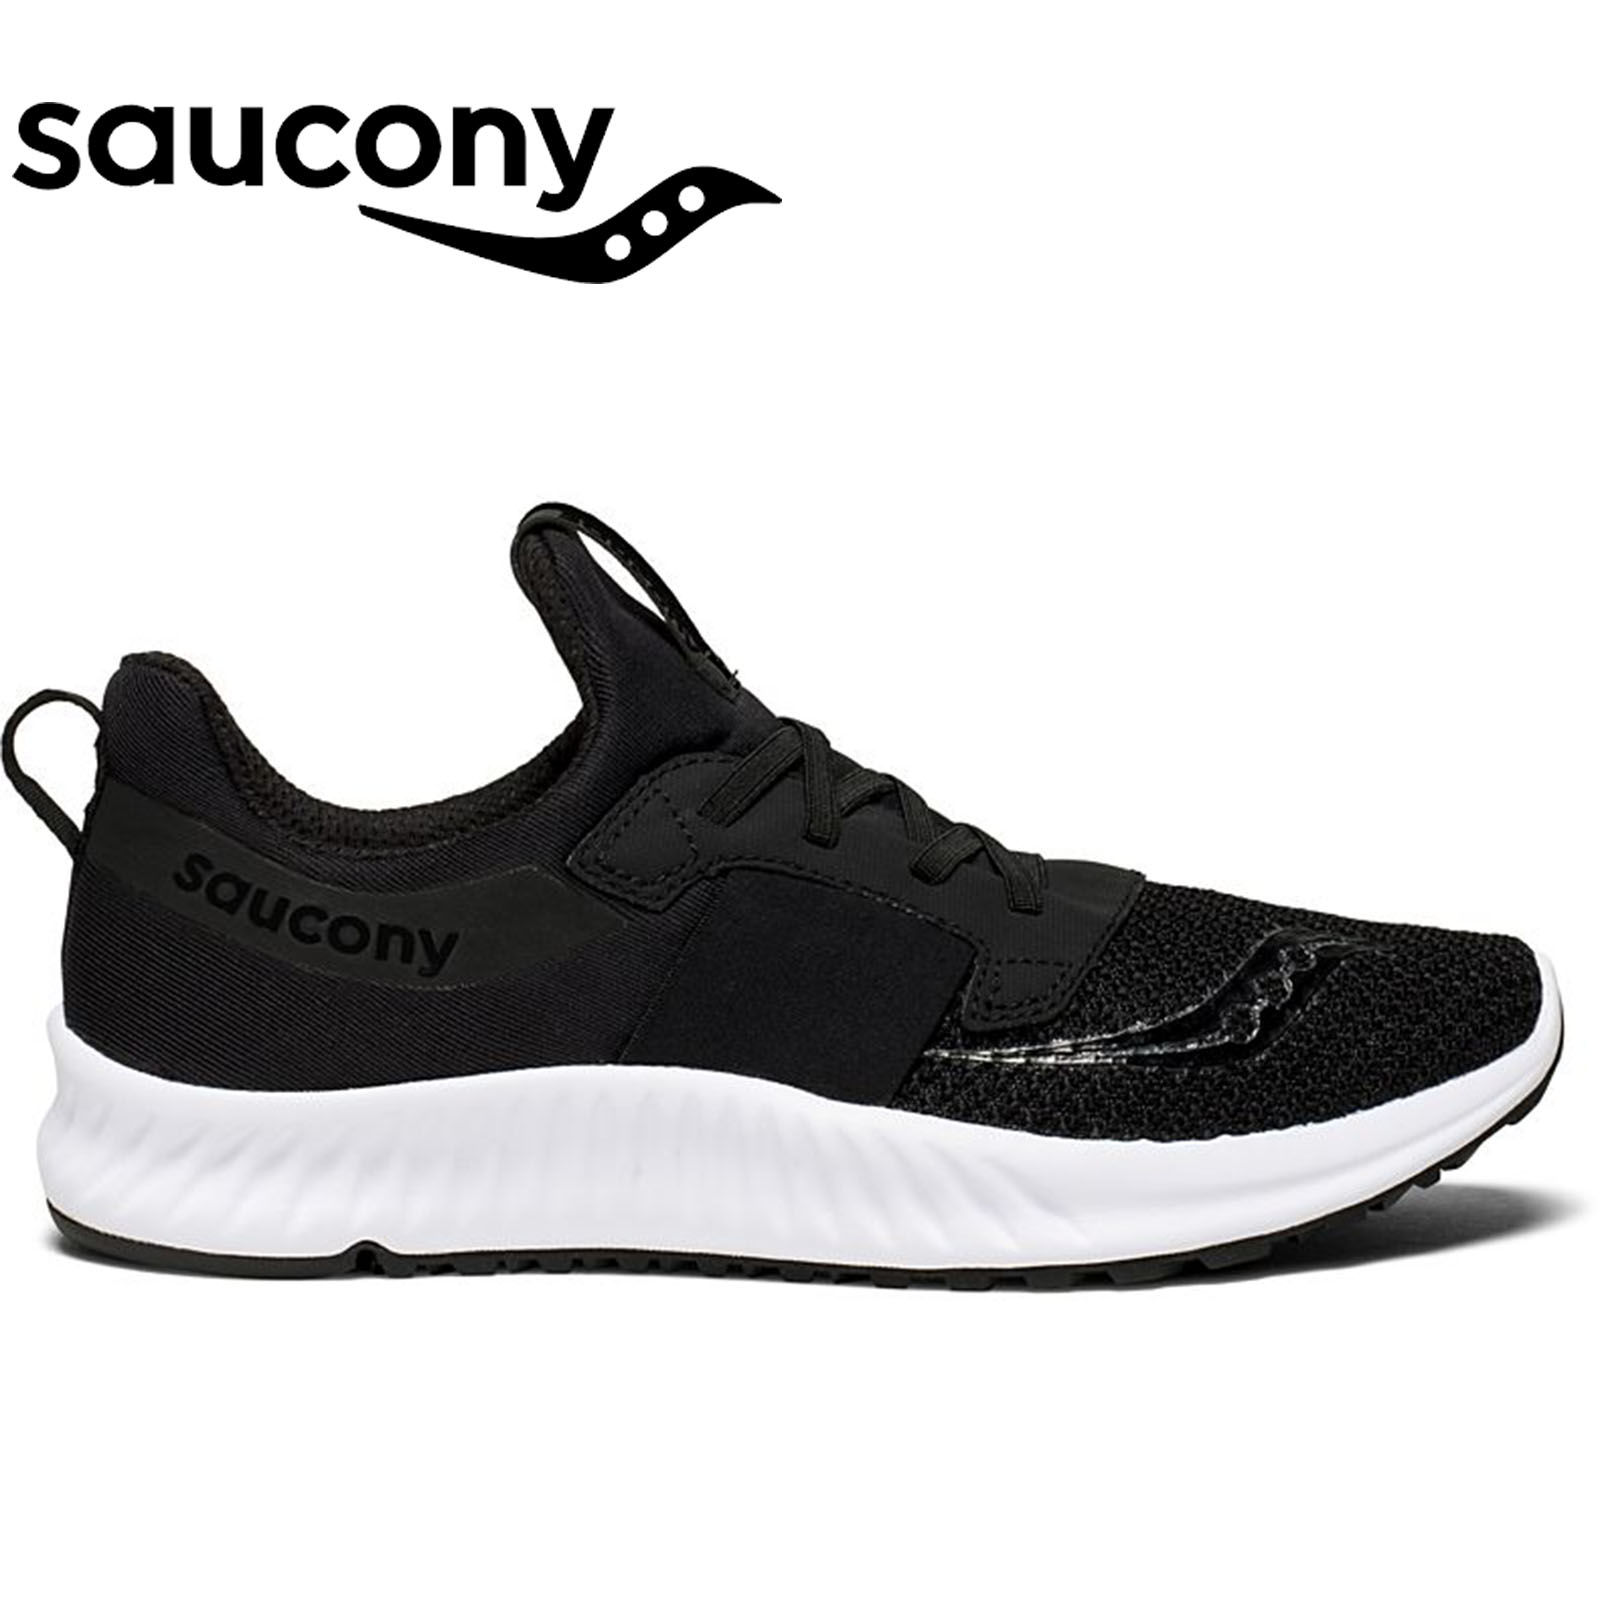 saucony memory foam sneakers